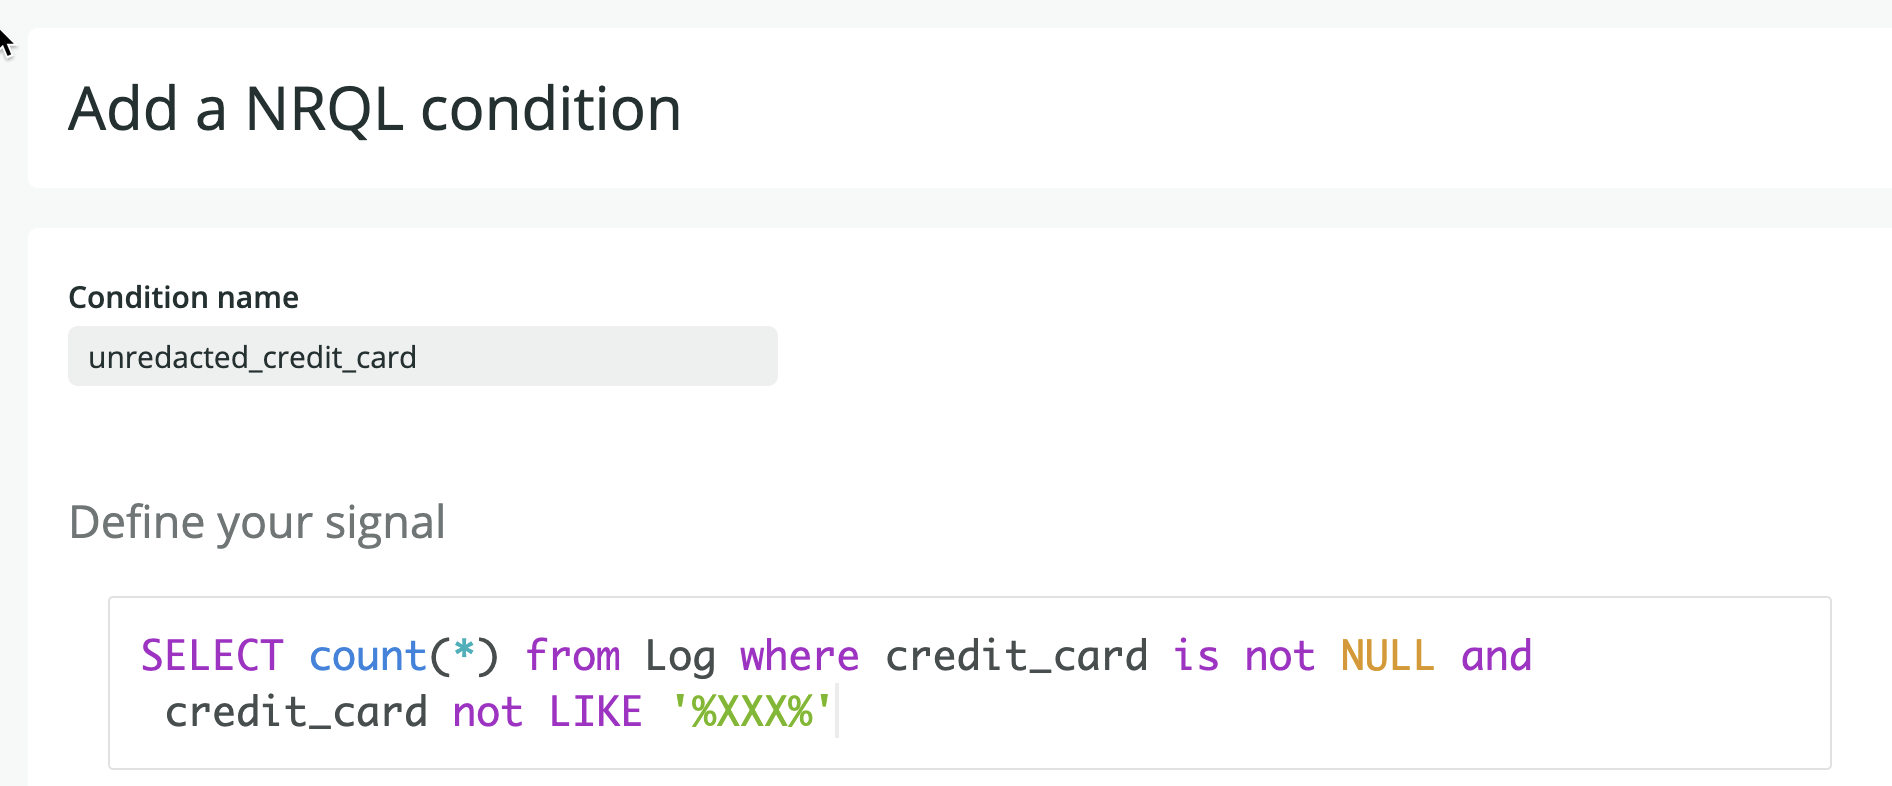 "Add a NRQL condition" example screenshot